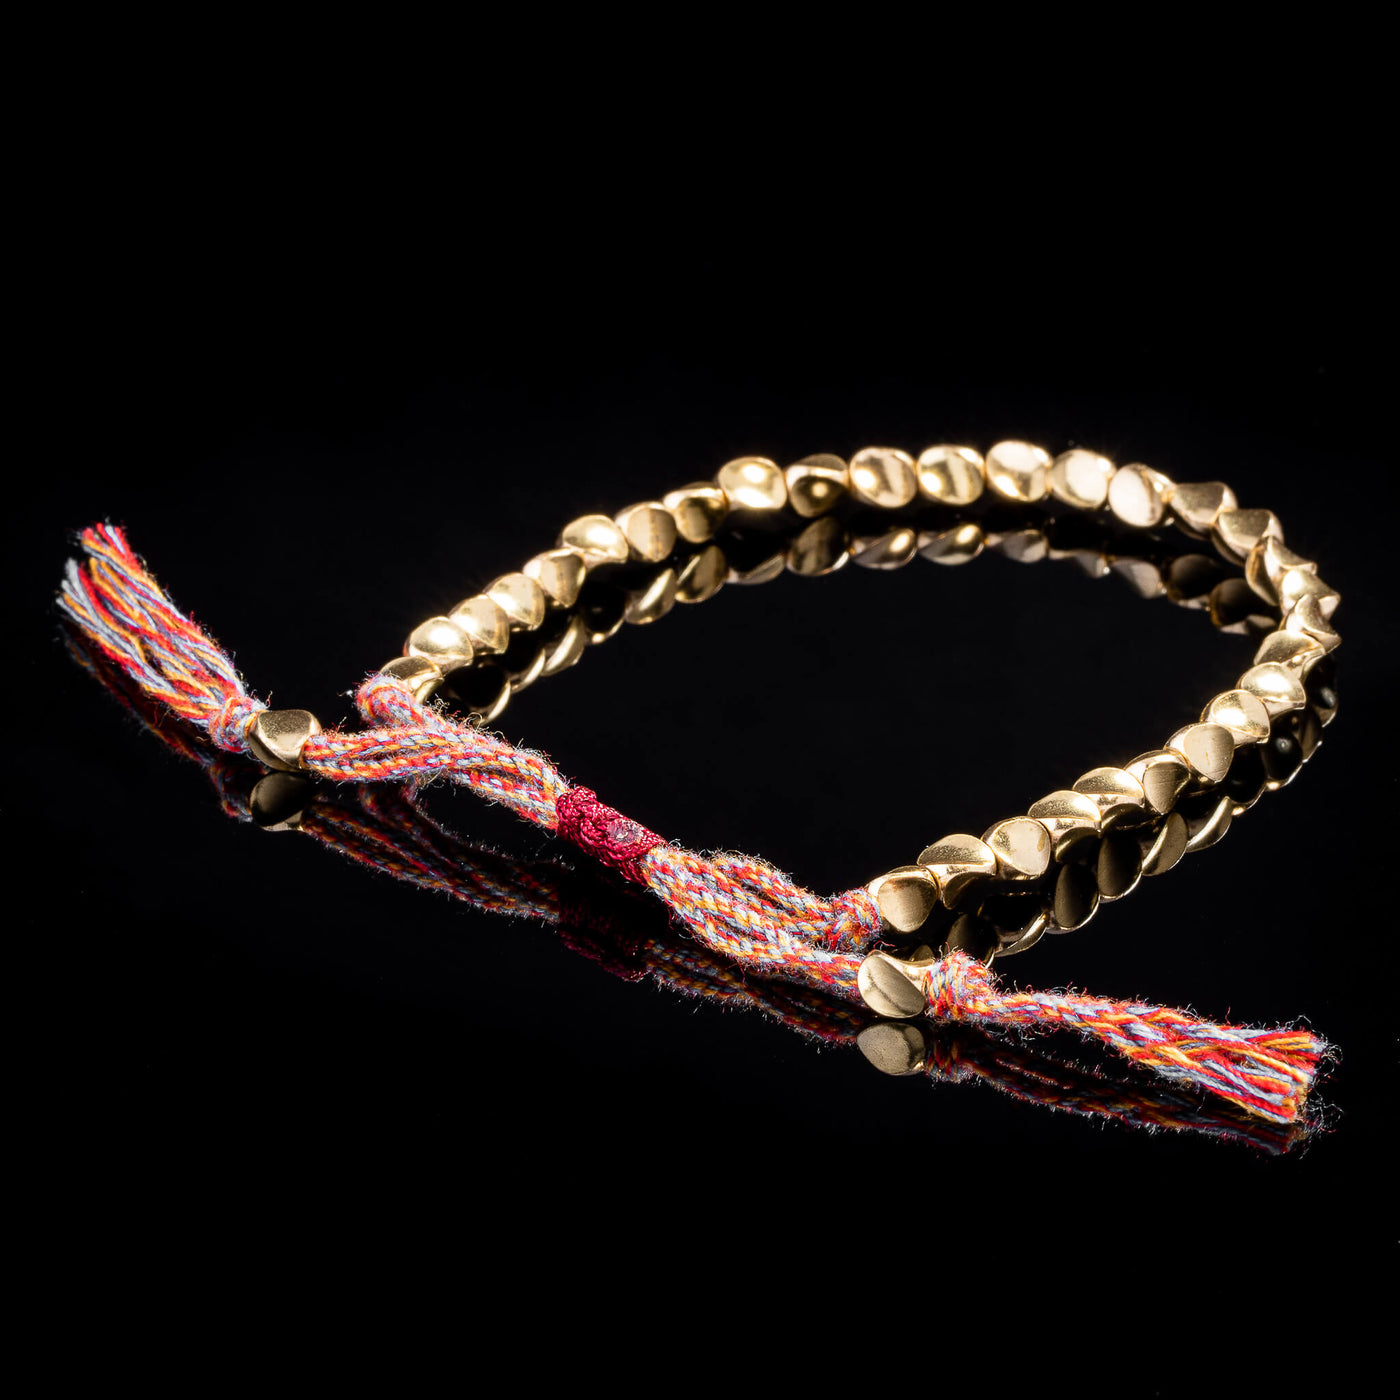 Tibetan Copper Beads Bracelet Handmade - For Healing, Strength & Protection - Buddha & Karma